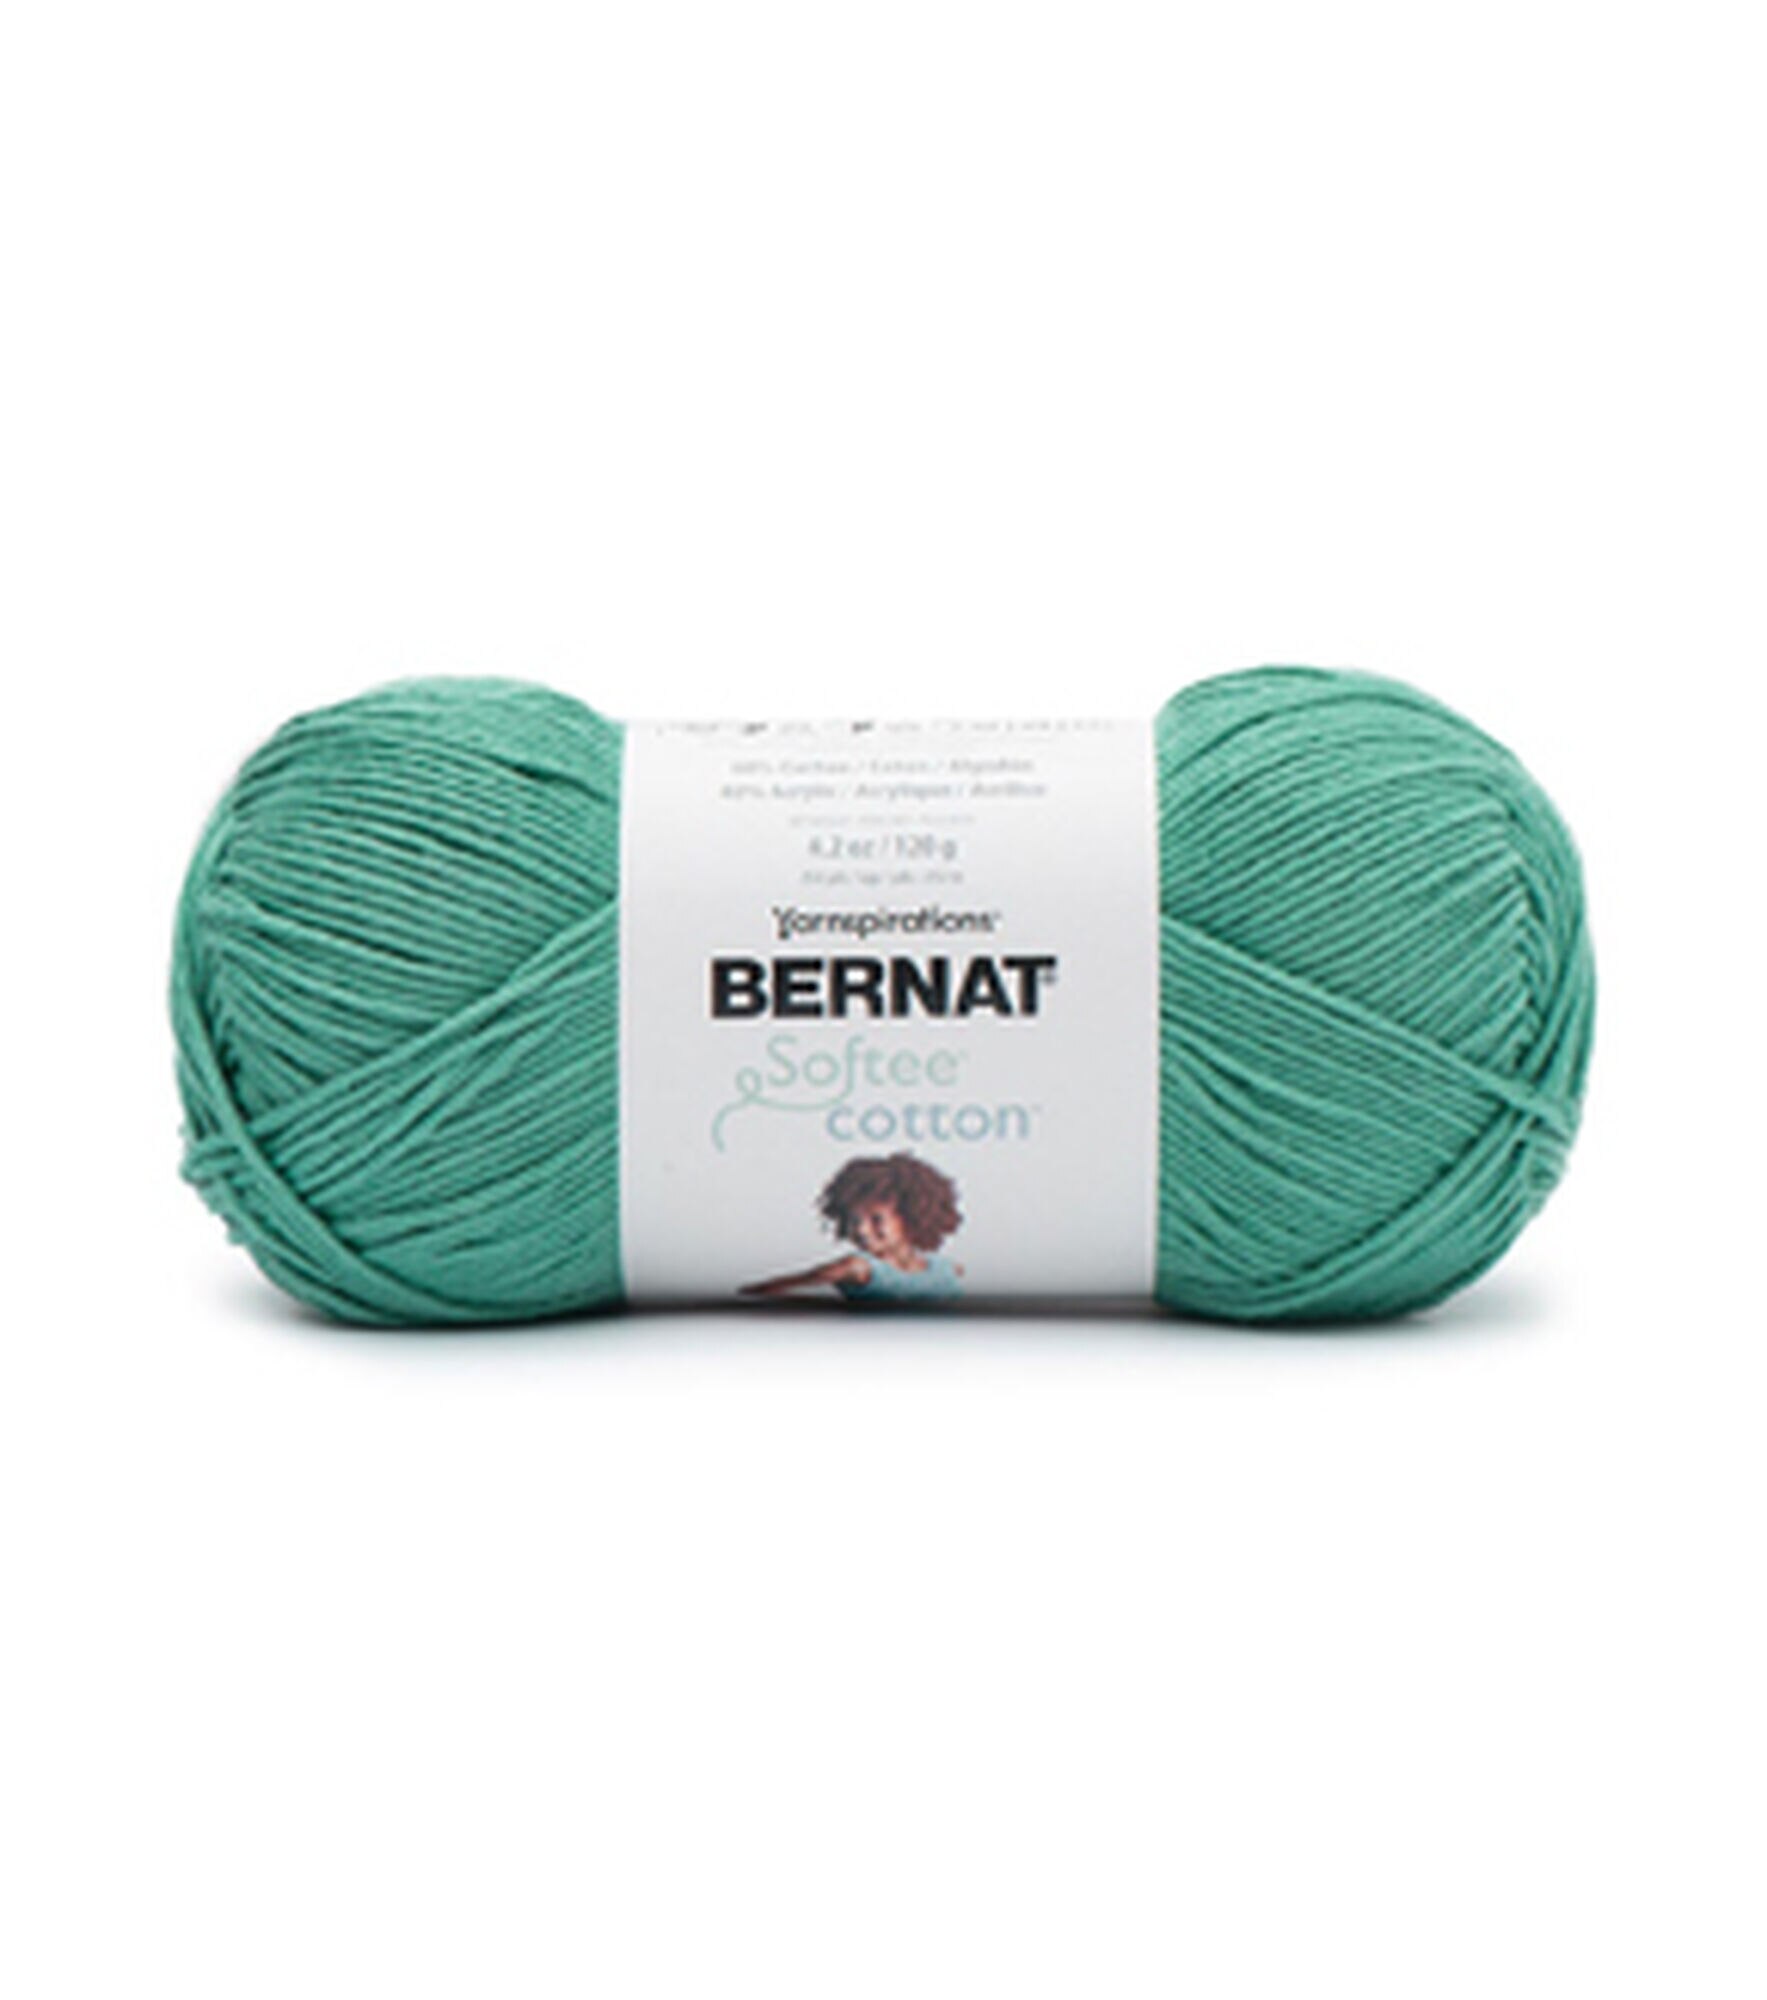 Bernat Softee 254yds Light Weight Cotton Yarn, Pool Green, hi-res